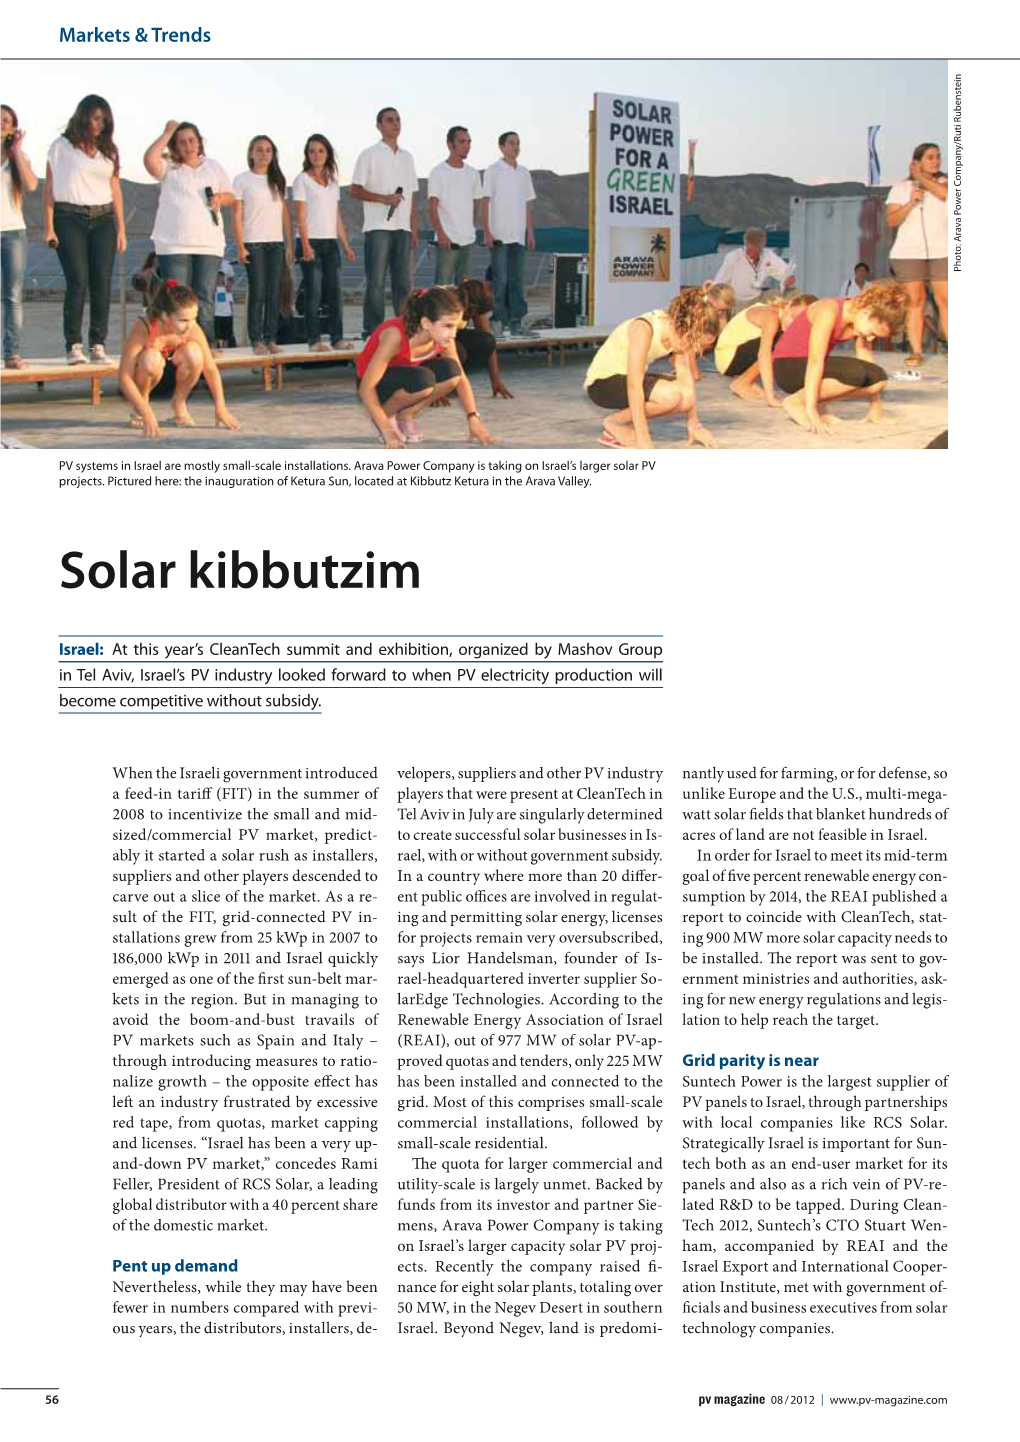 Solar Kibbutzim